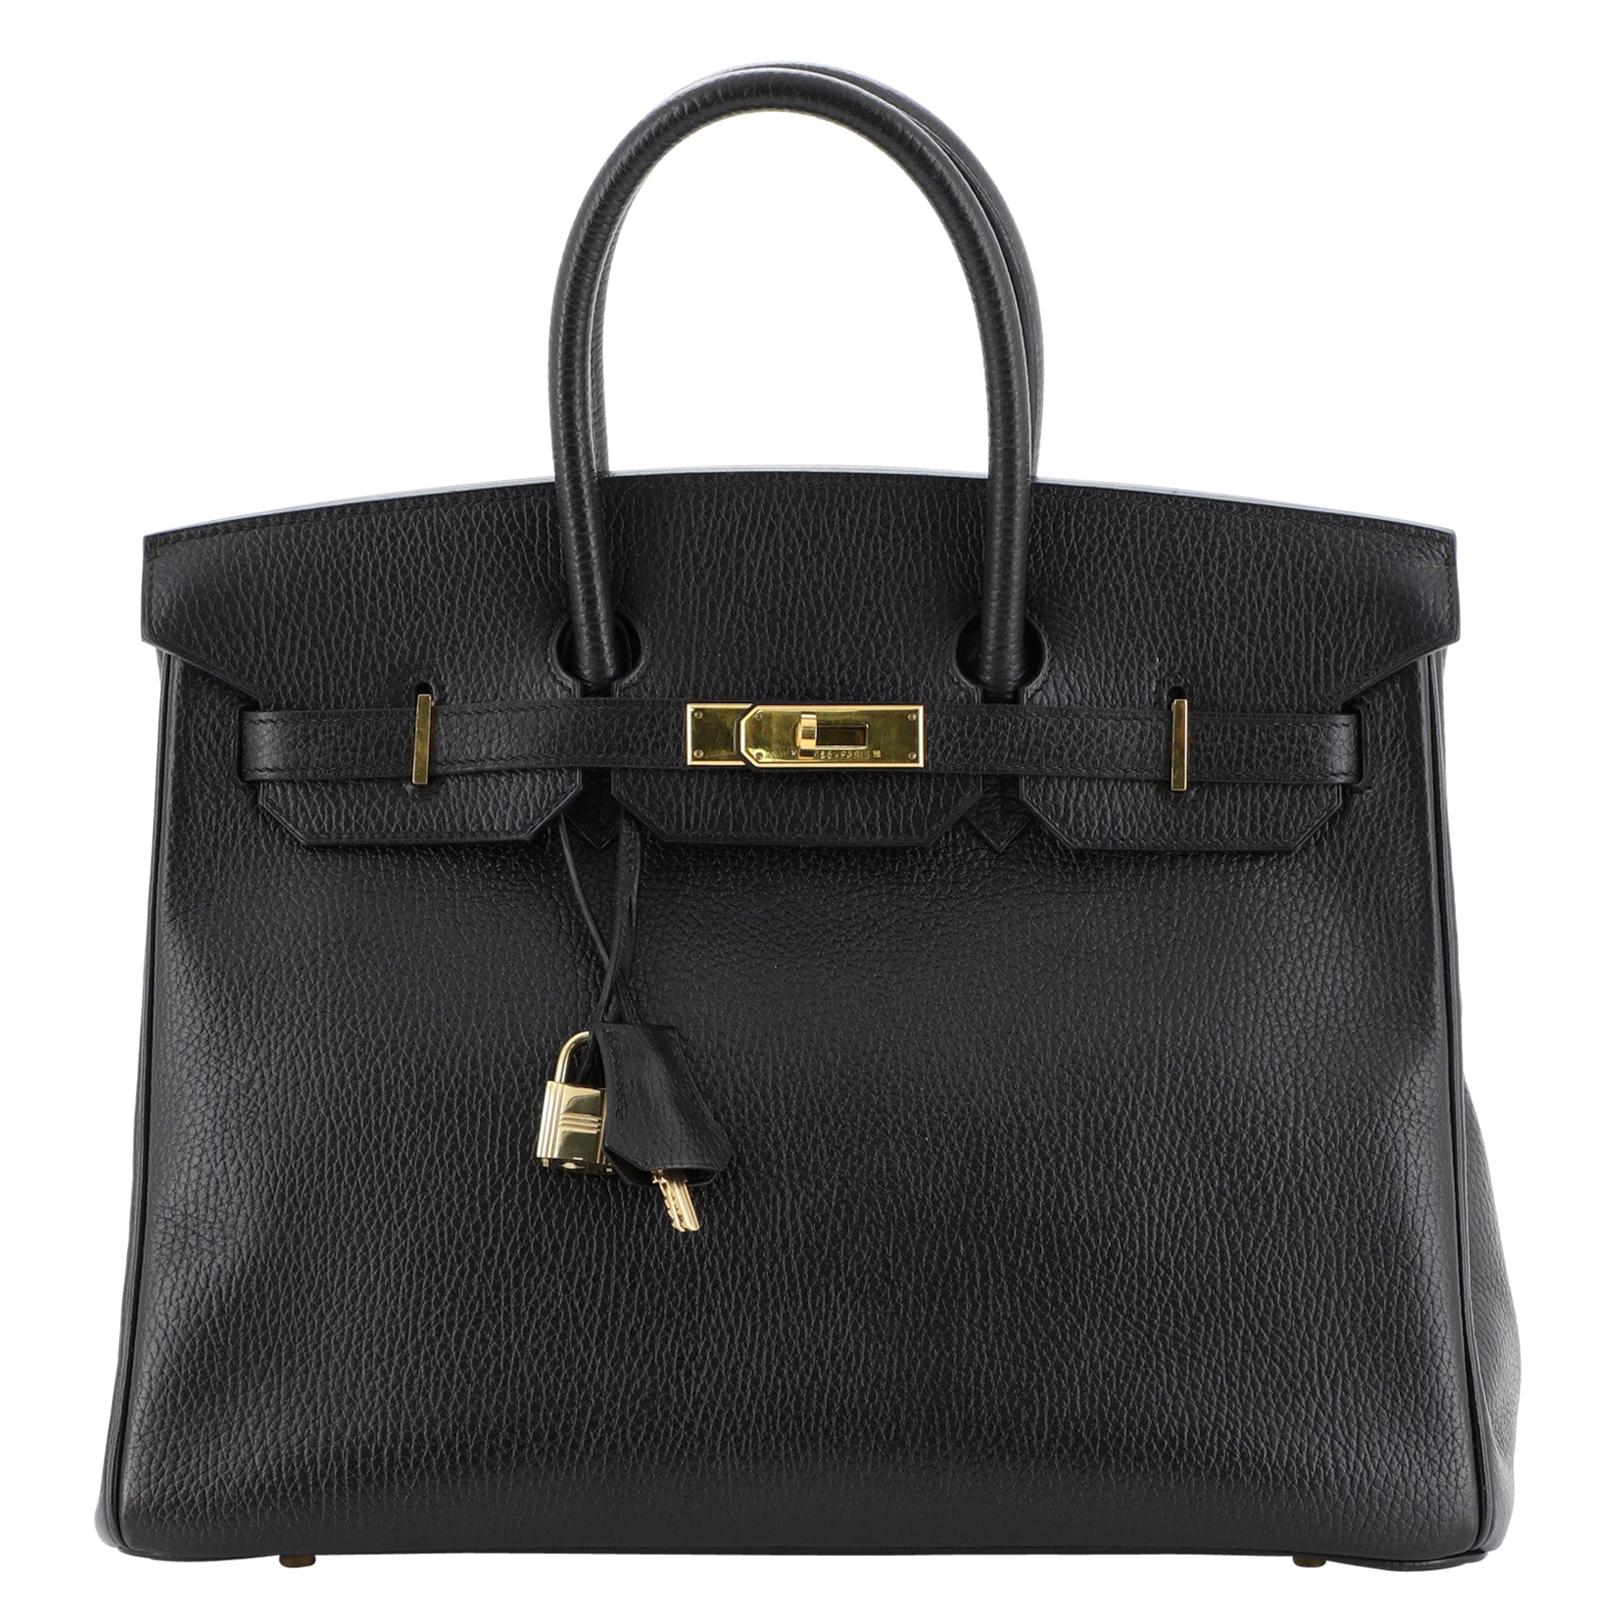 Hermes Birkin Handbag Noir Ardennes With Gold Hardware 35 